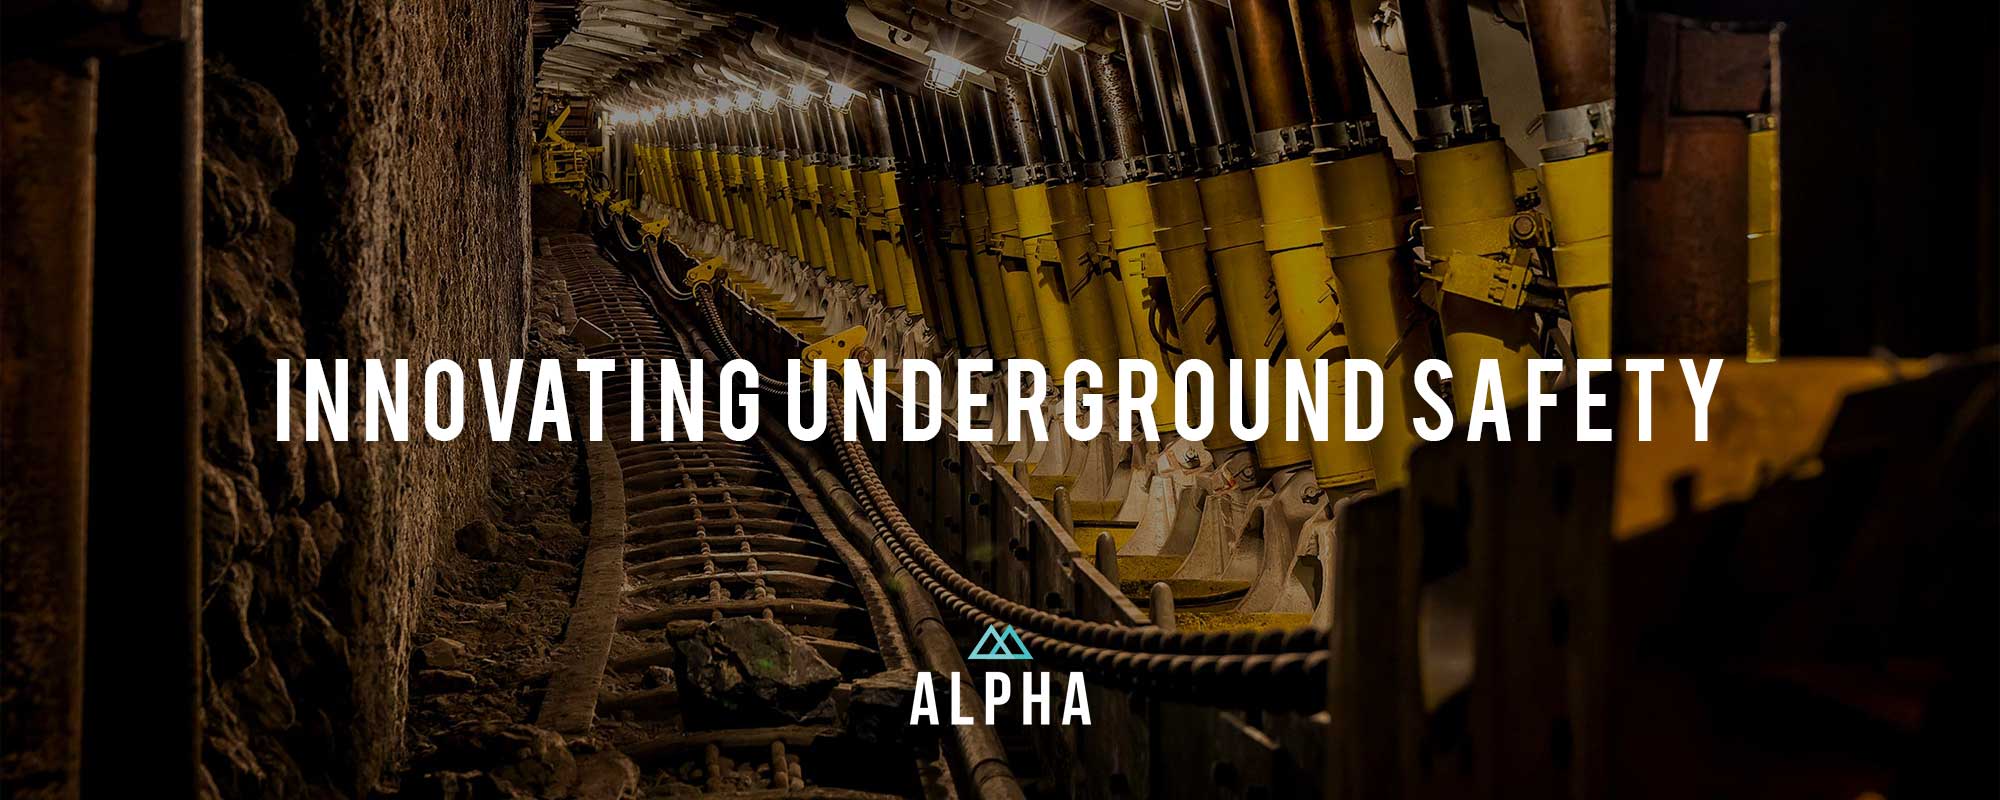 Alpha Mining Equipment